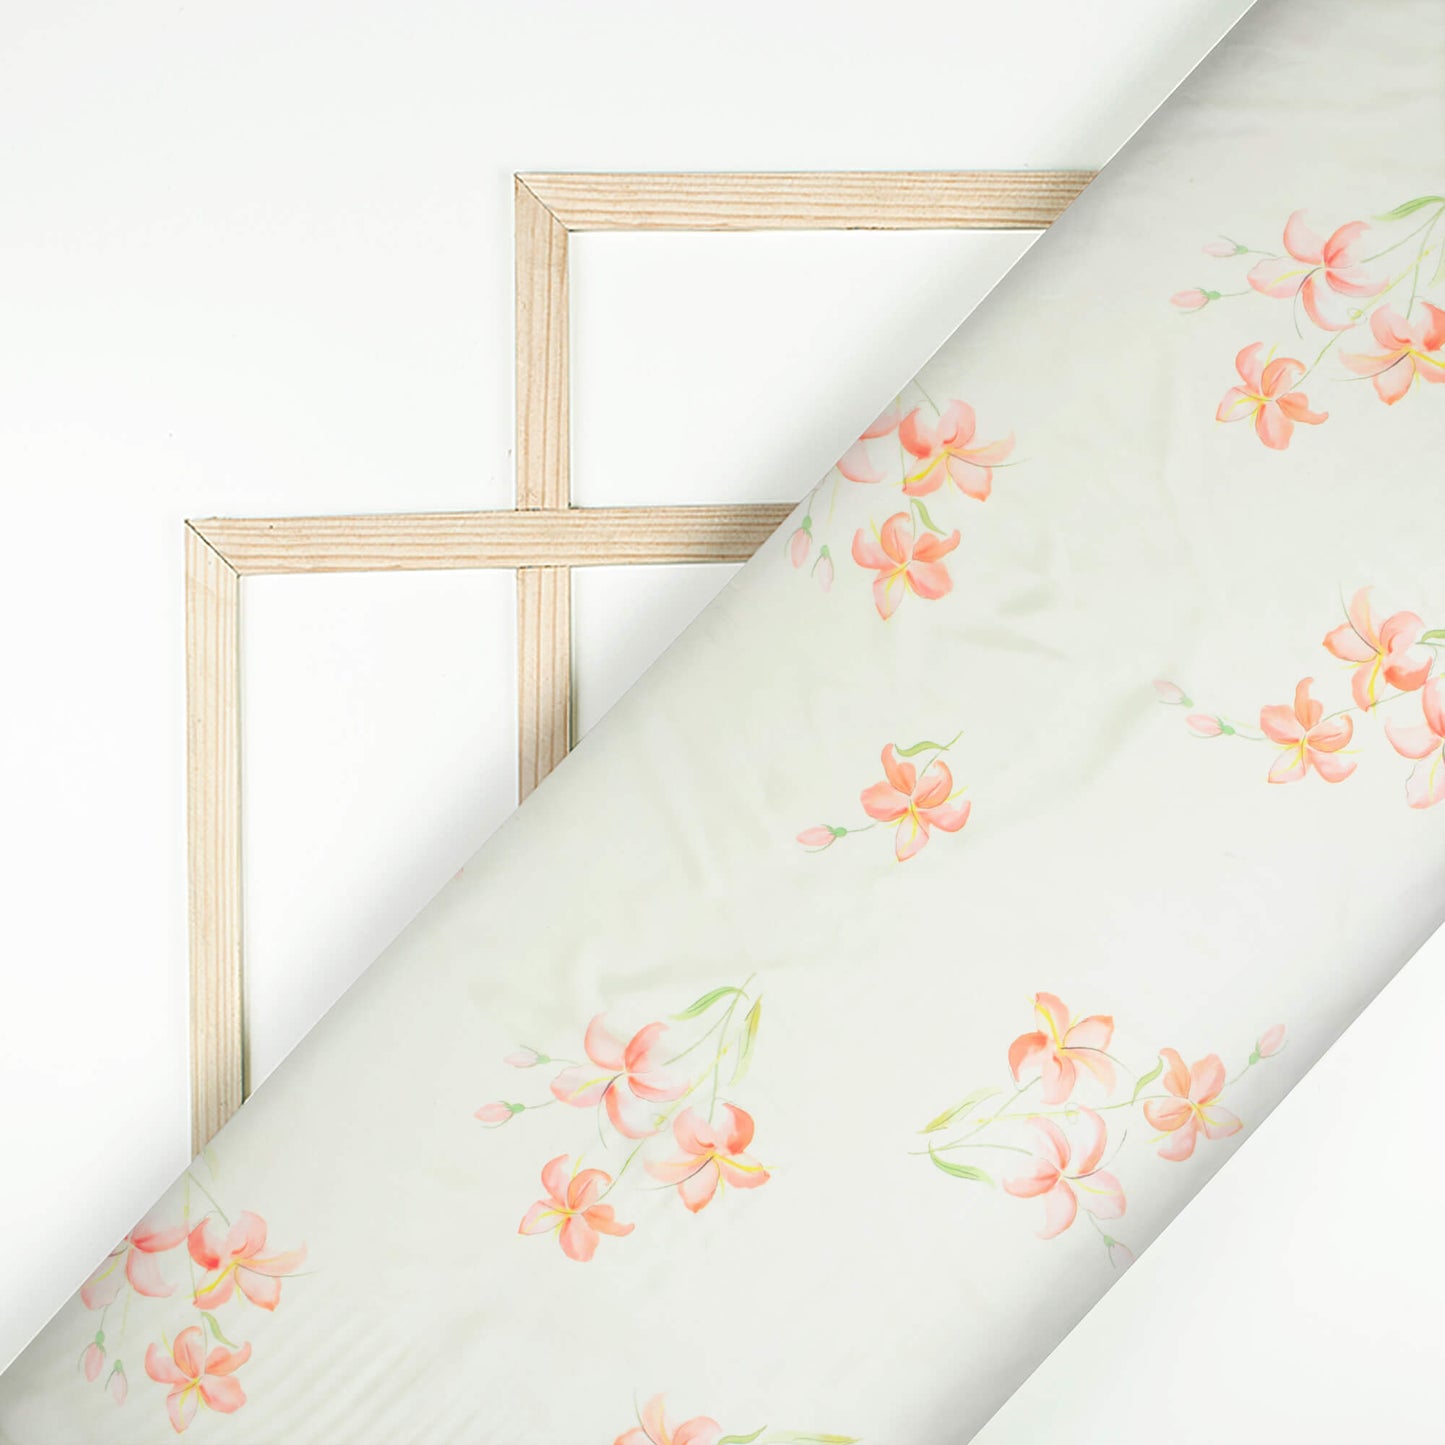 Daisy White And Peach Floral Pattern Digital Print Organza Satin Fabric